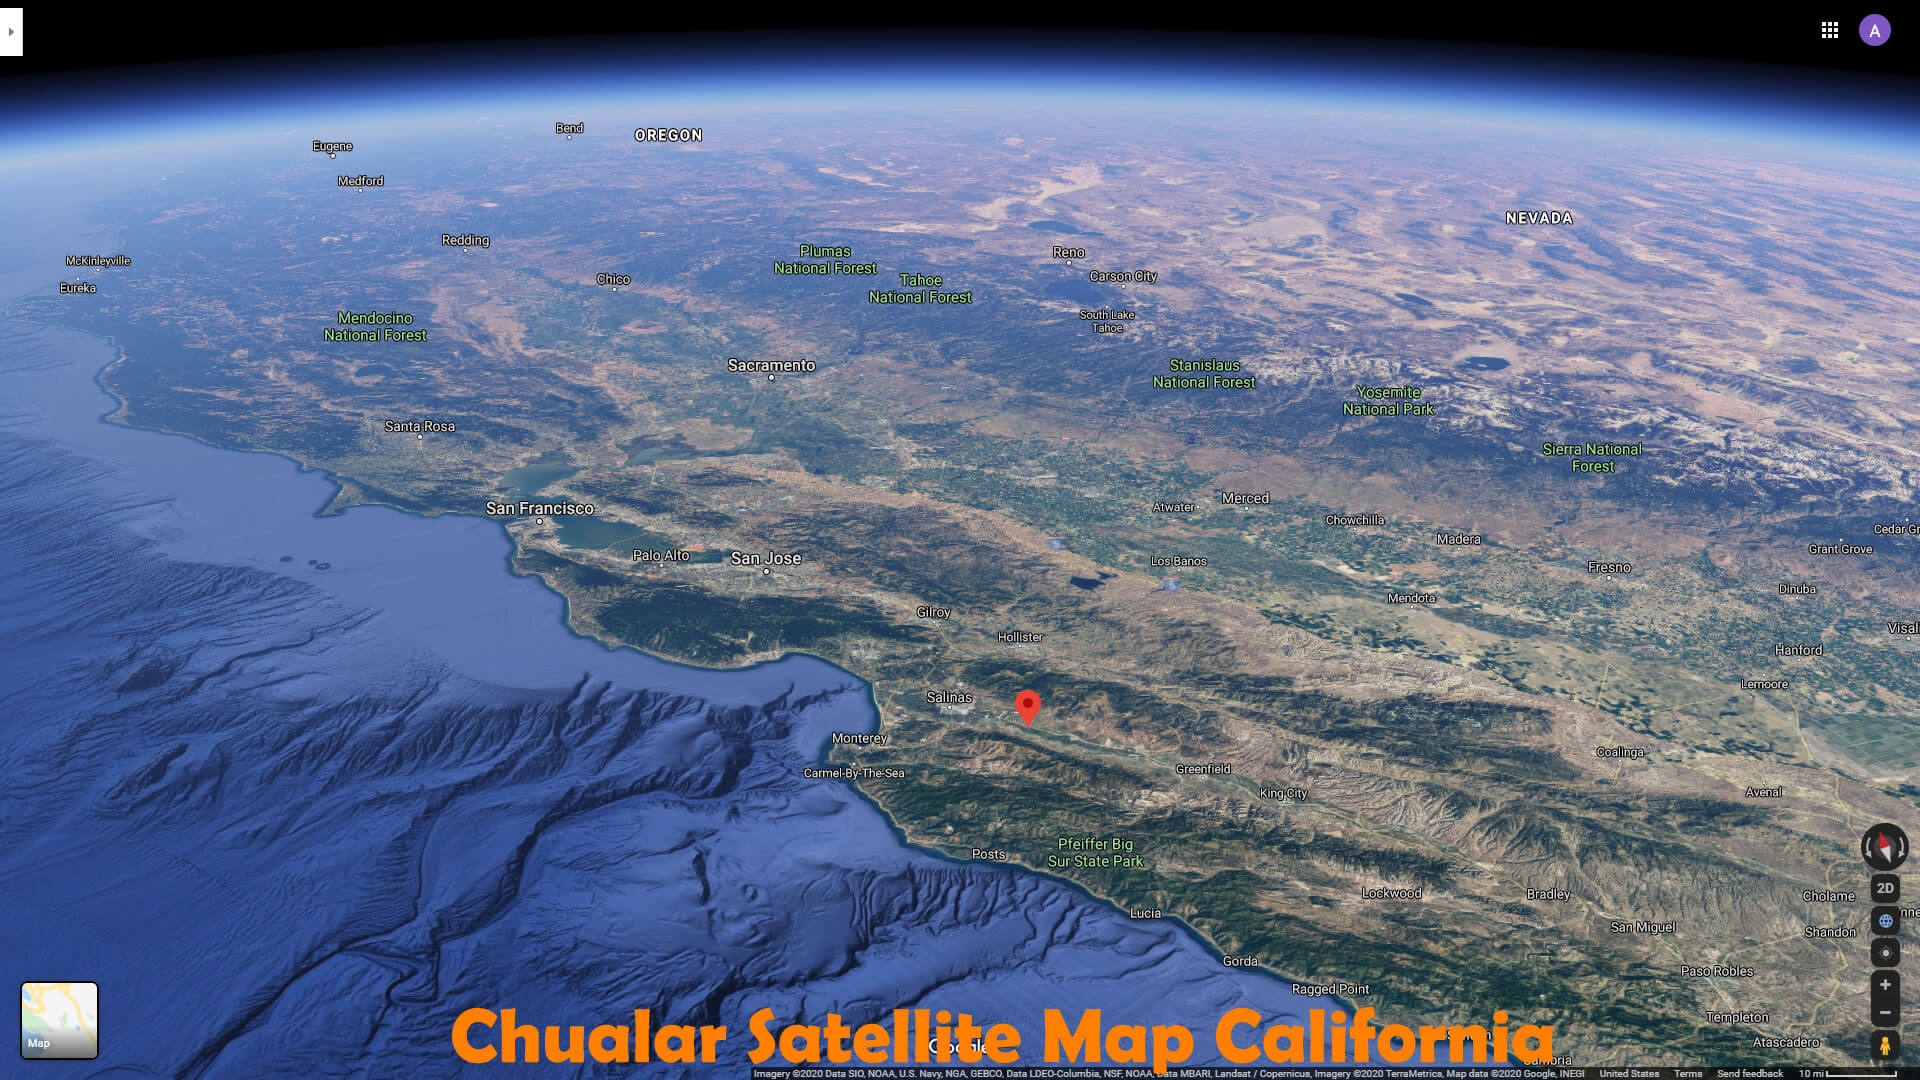 Chualar Satellite Map California